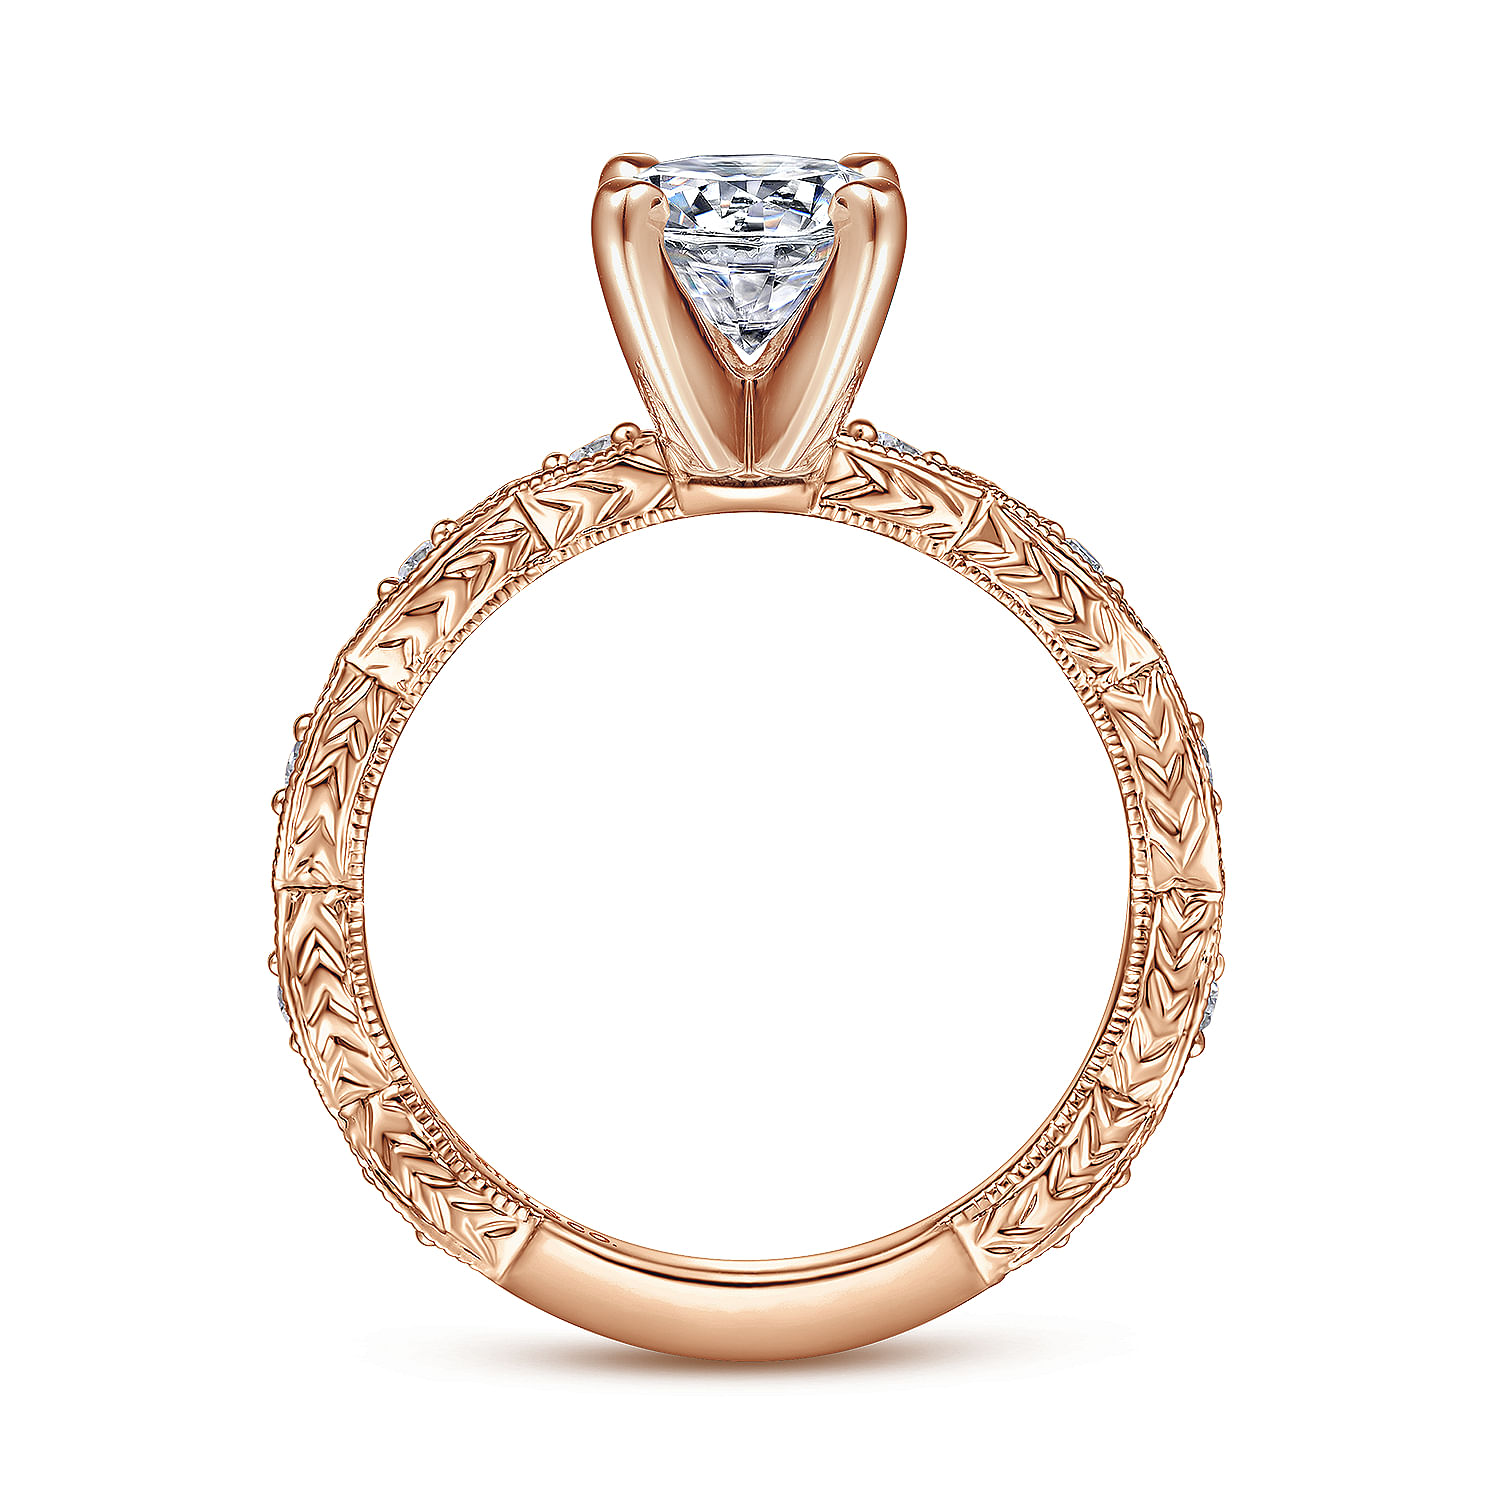 Vintage Inspired 14K Rose Gold Round Diamond Engagement Ring